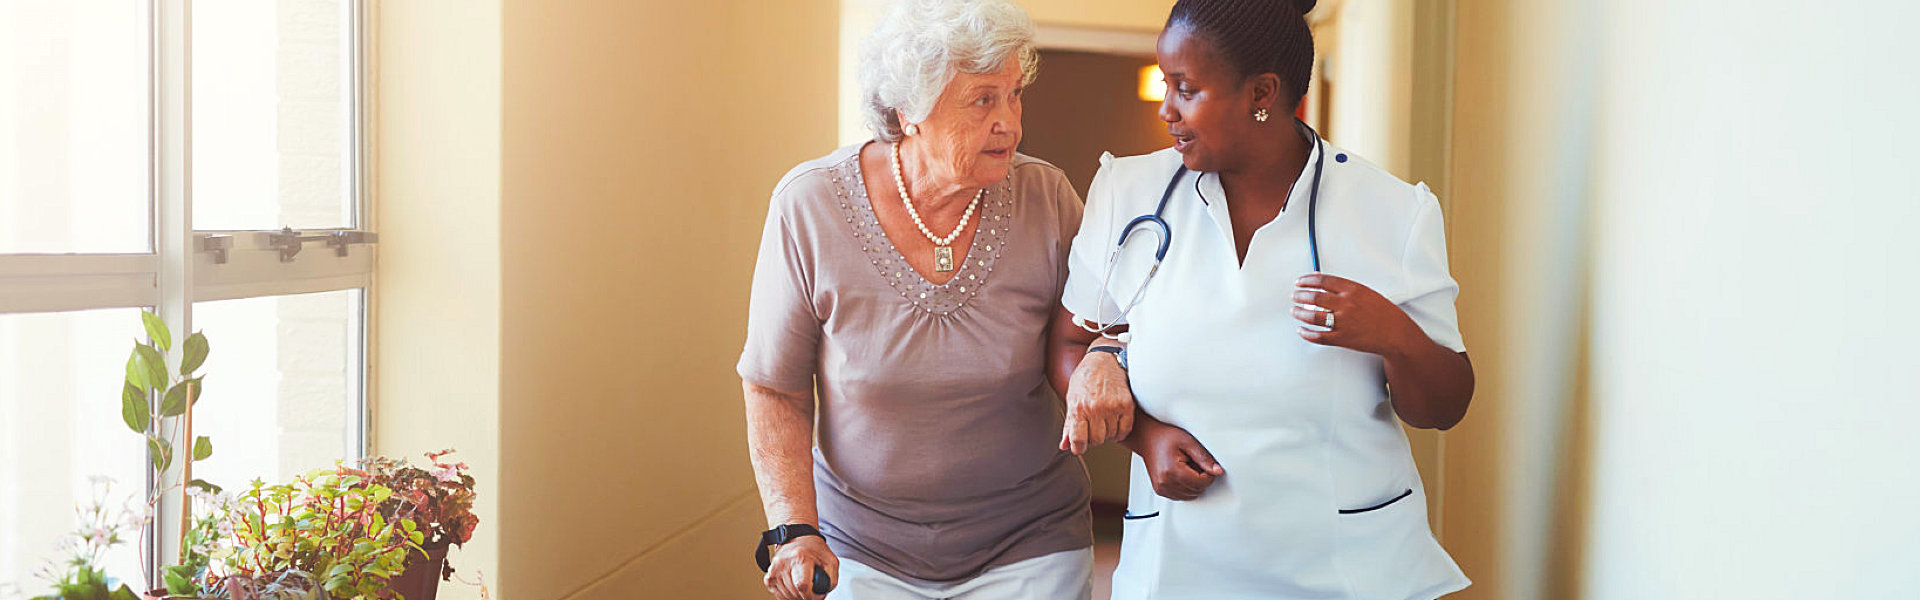 caregiver assisting an elderly woman